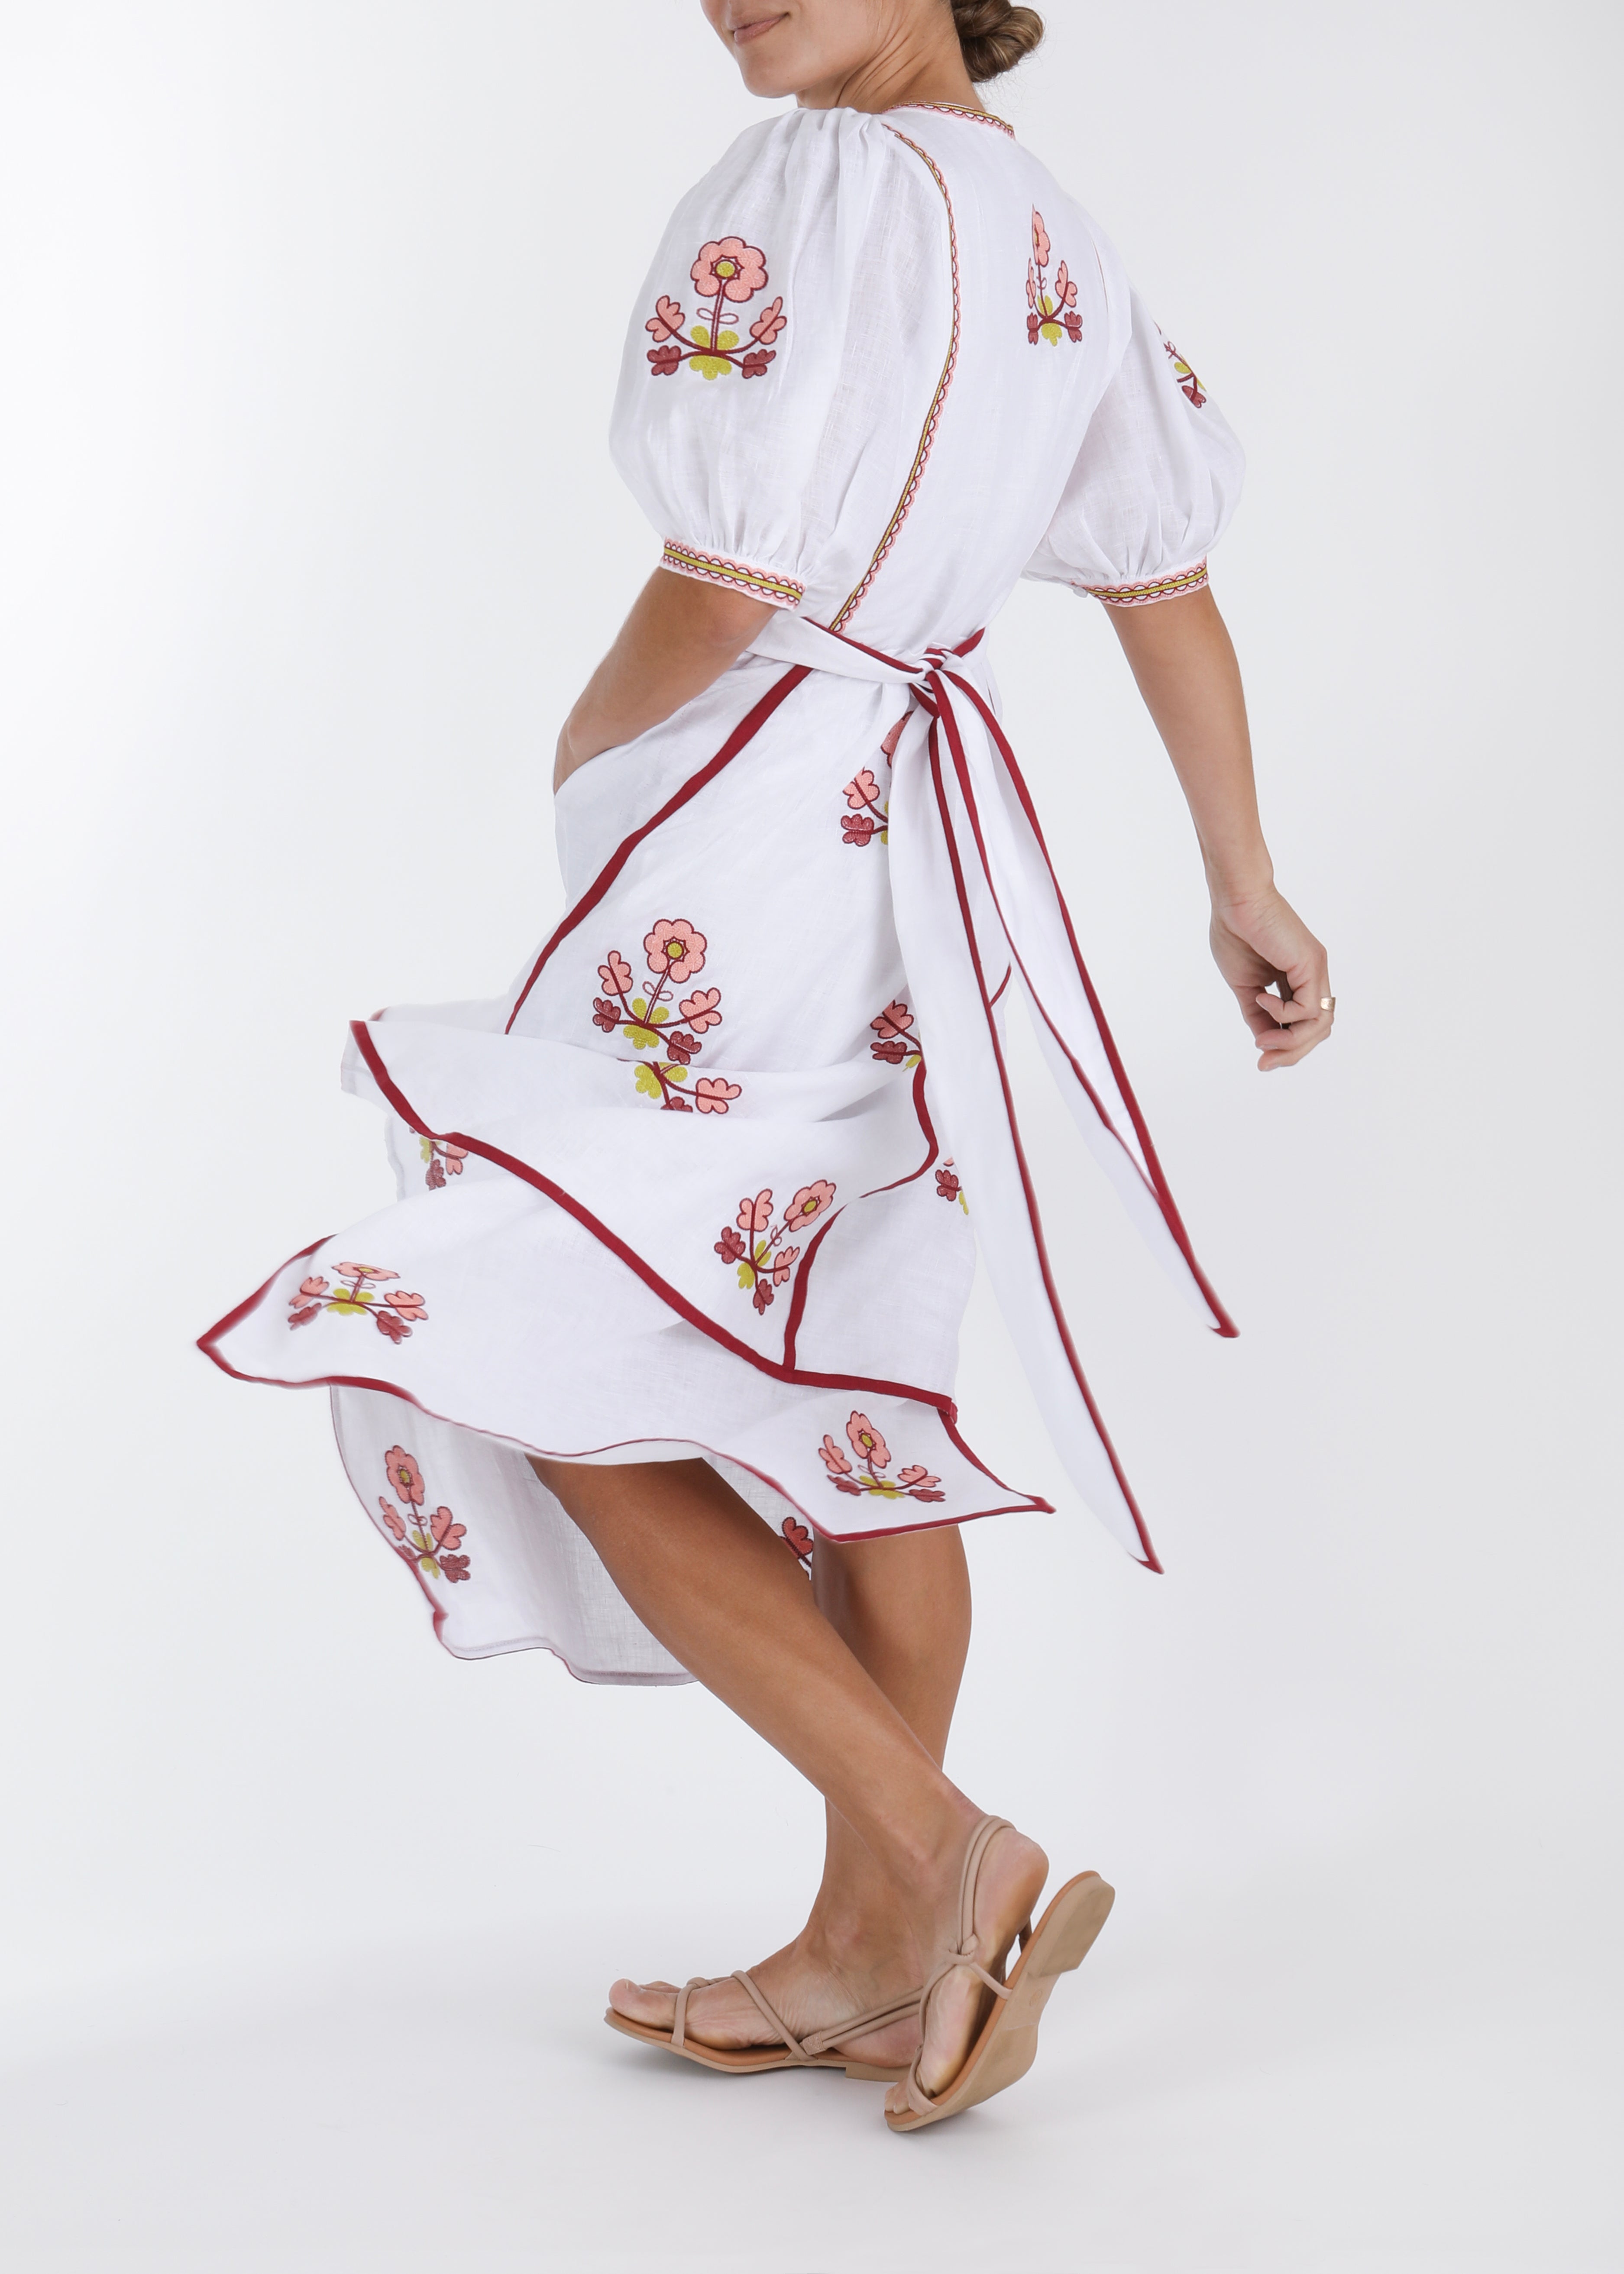 Lillie Ukrainian Embroidered Dress - White, Blush Pink, Wine by Larkin Lane